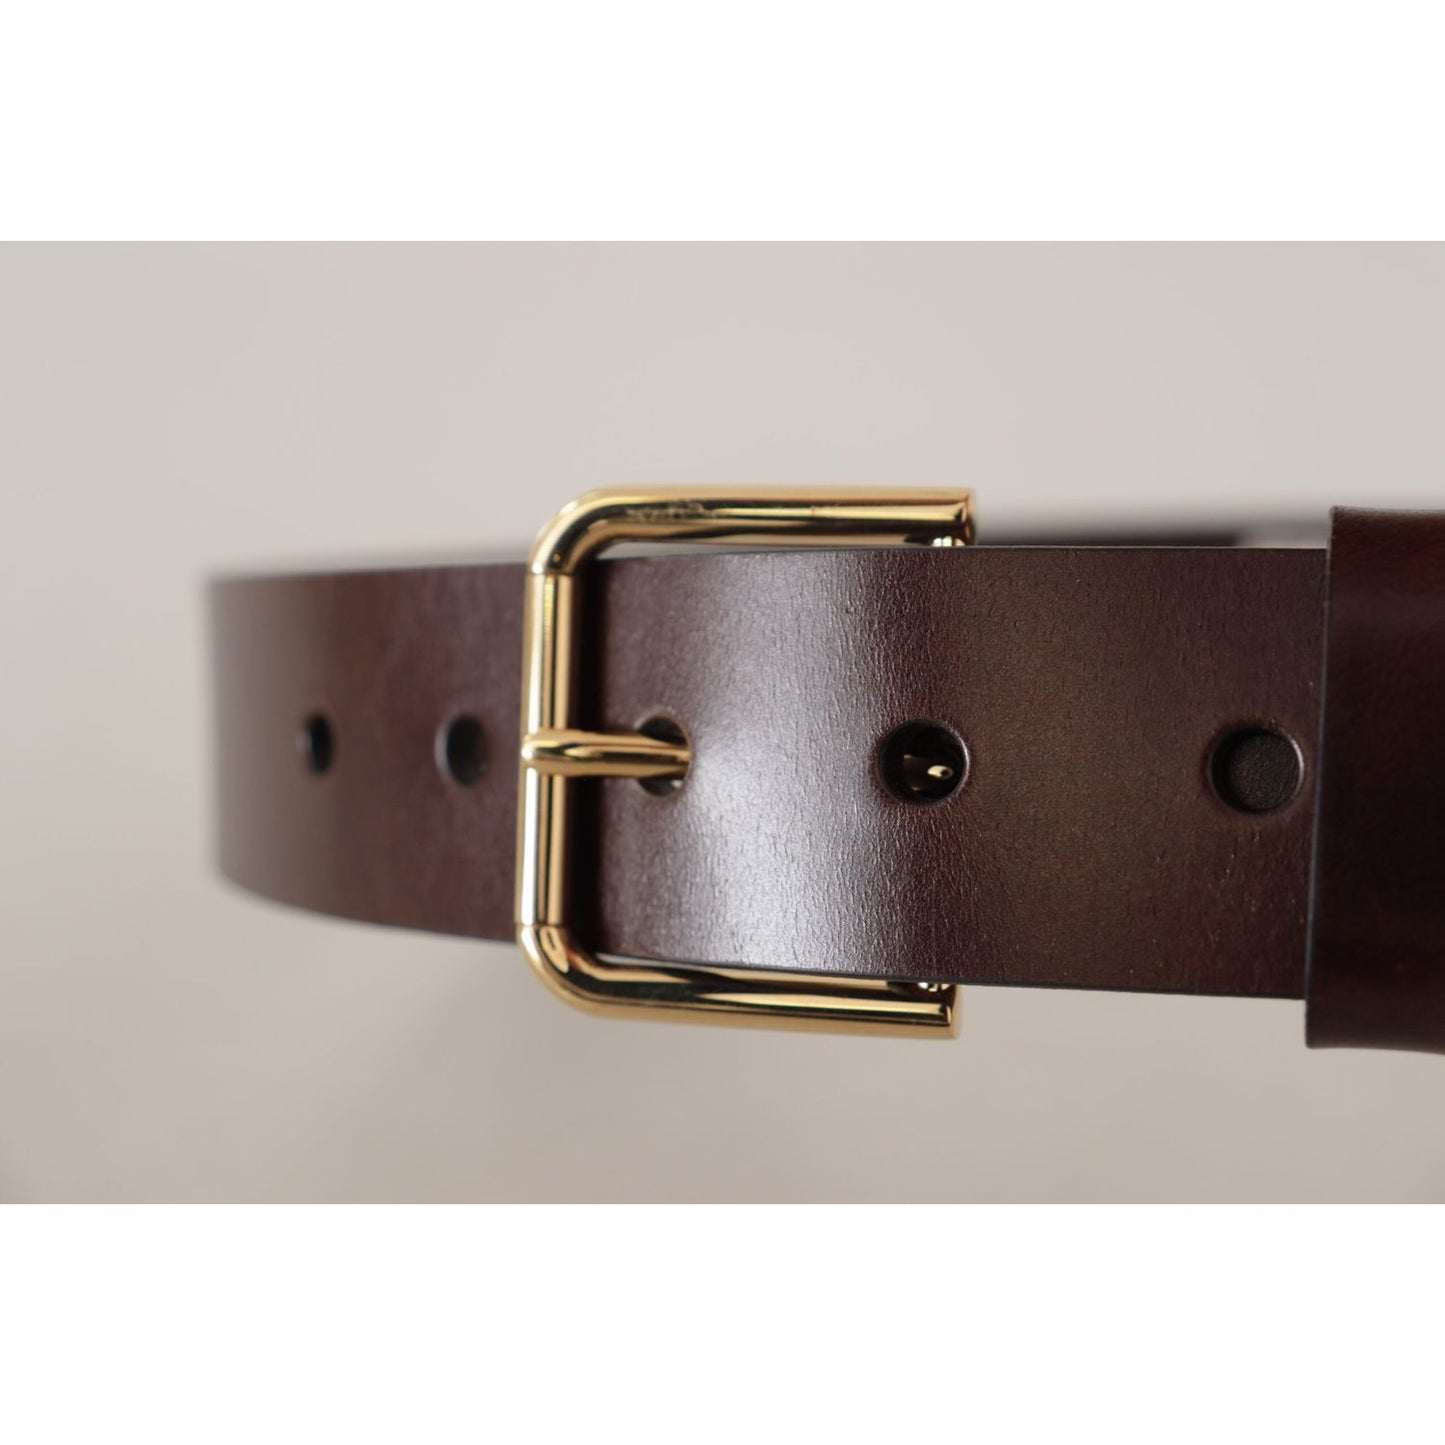 Dolce & Gabbana Elegant Black Leather Belt with Metal Buckle brown-polished-leather-gold-tone-metal-buckle-belt IMG_7161-scaled-5a071eb7-ab8.jpg